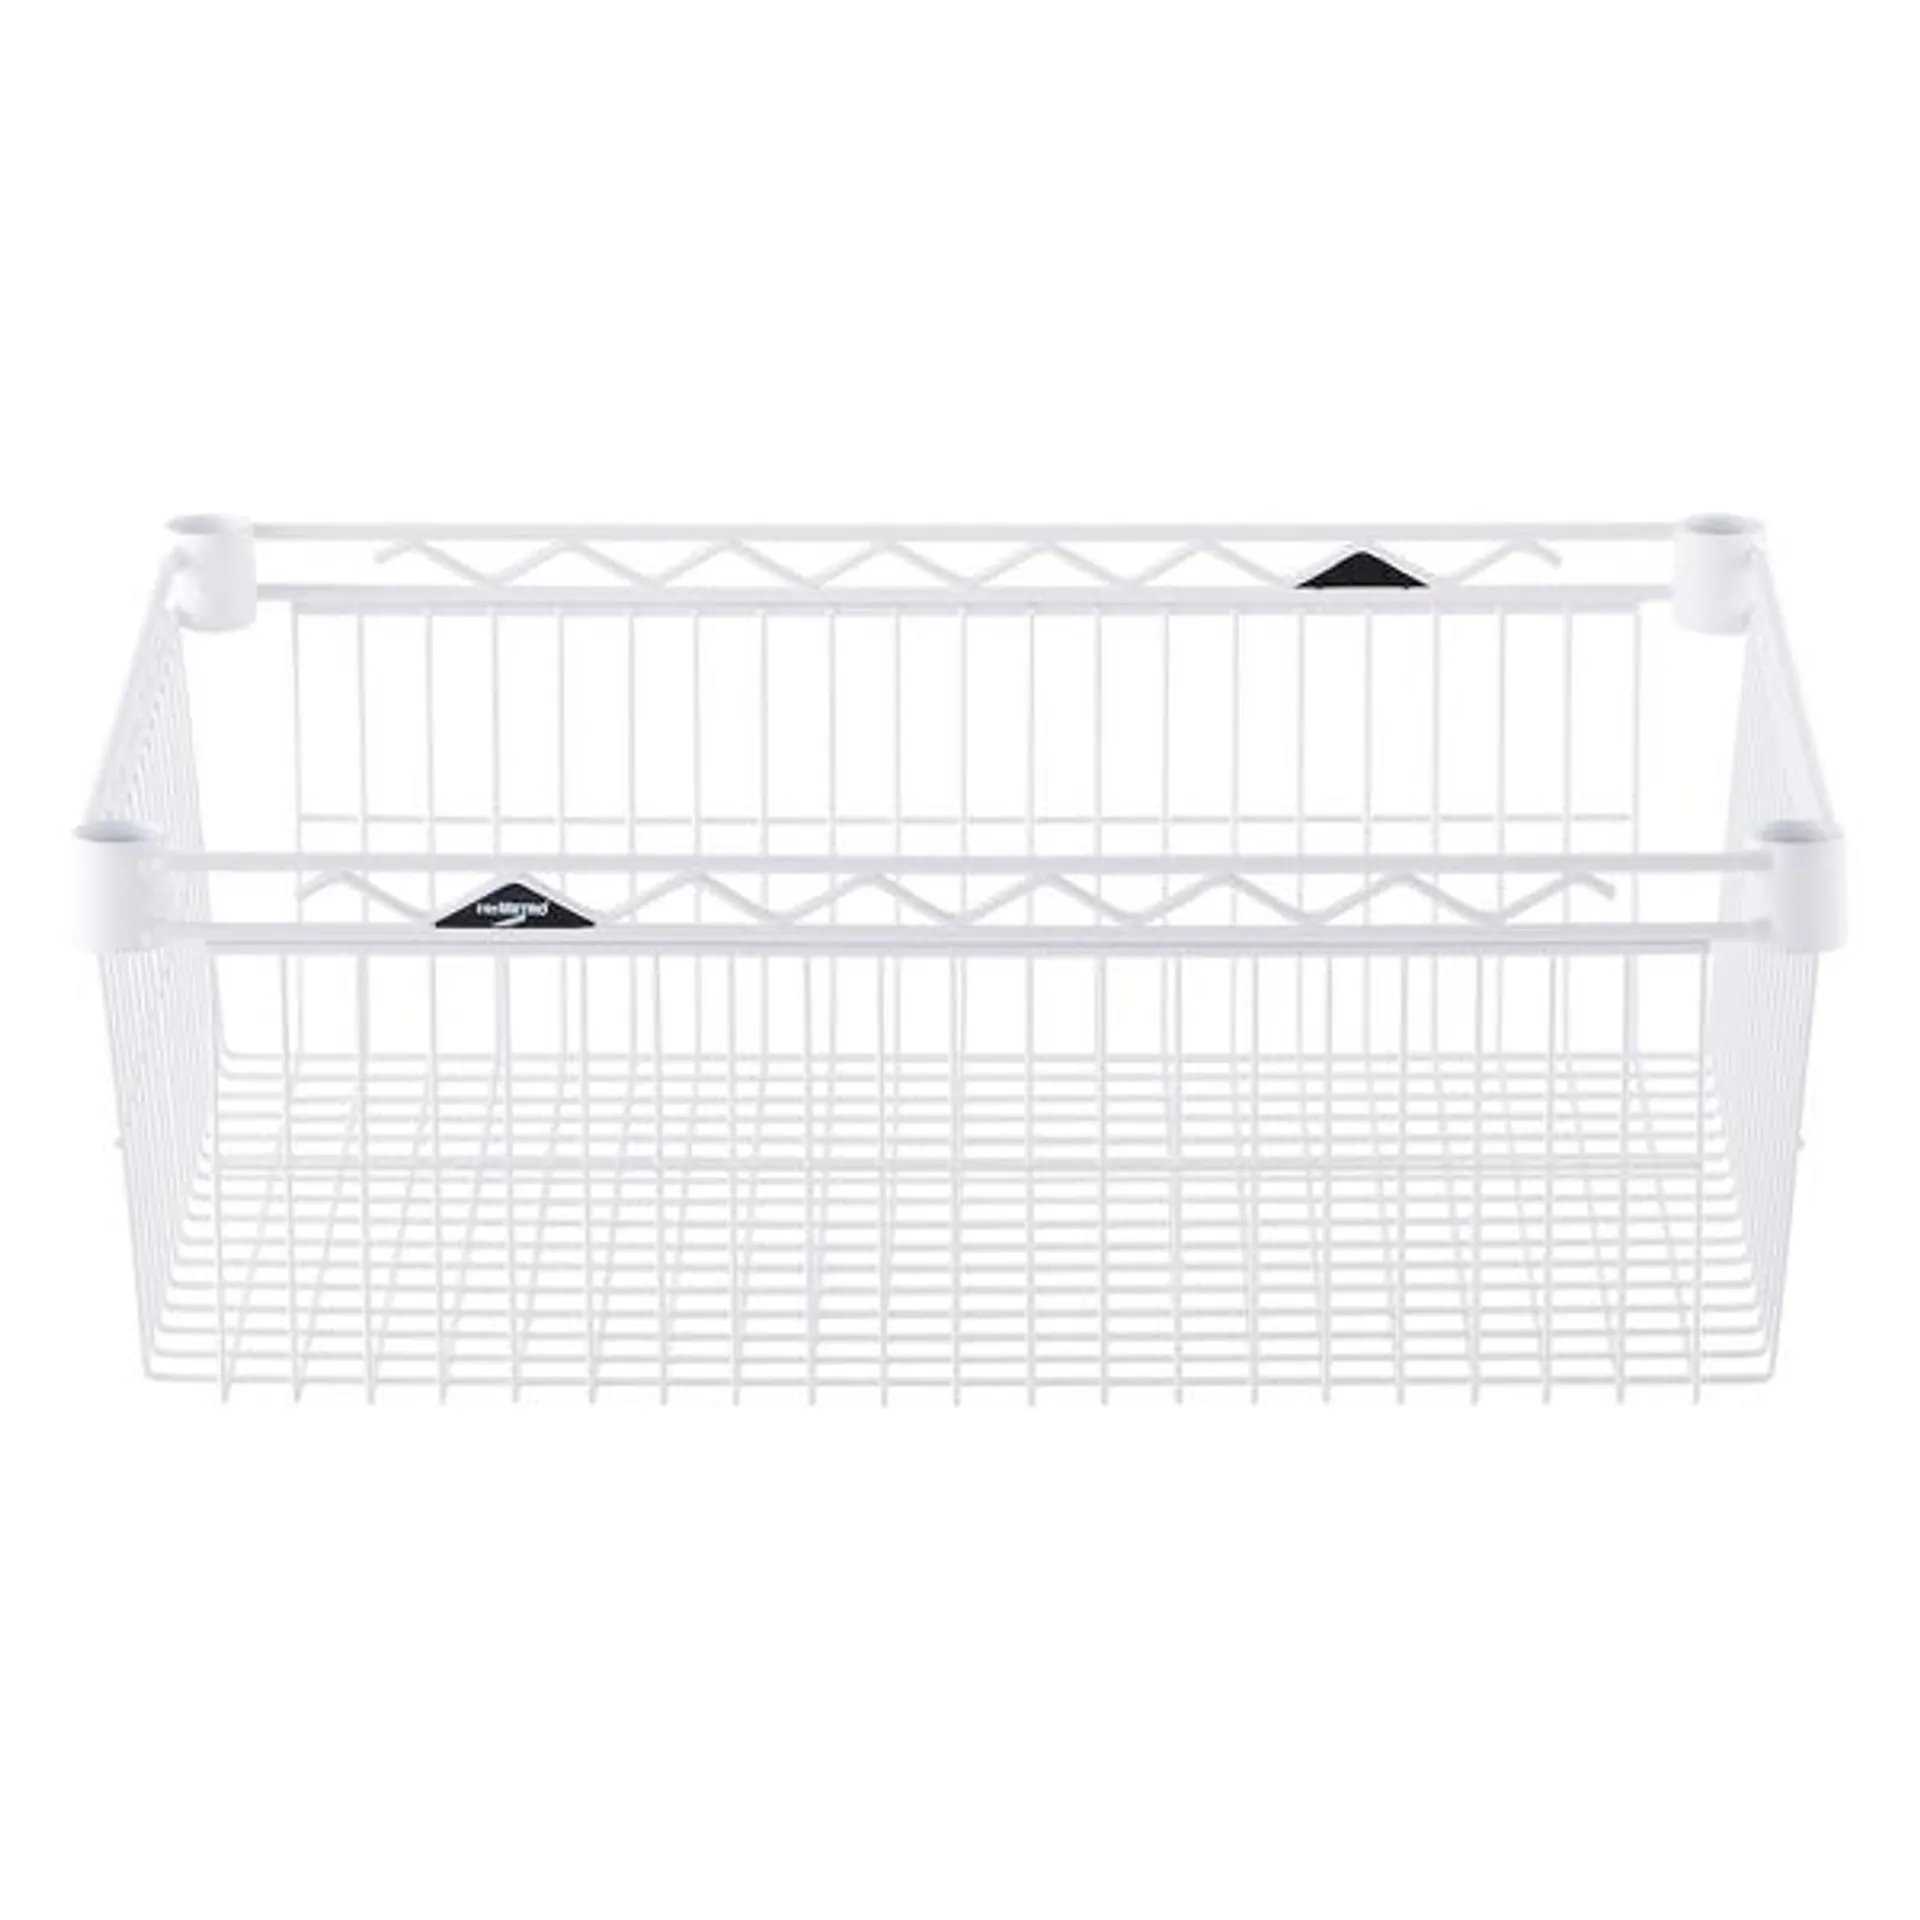 18" x 24" x 8" h InterMetro Basket Shelf White